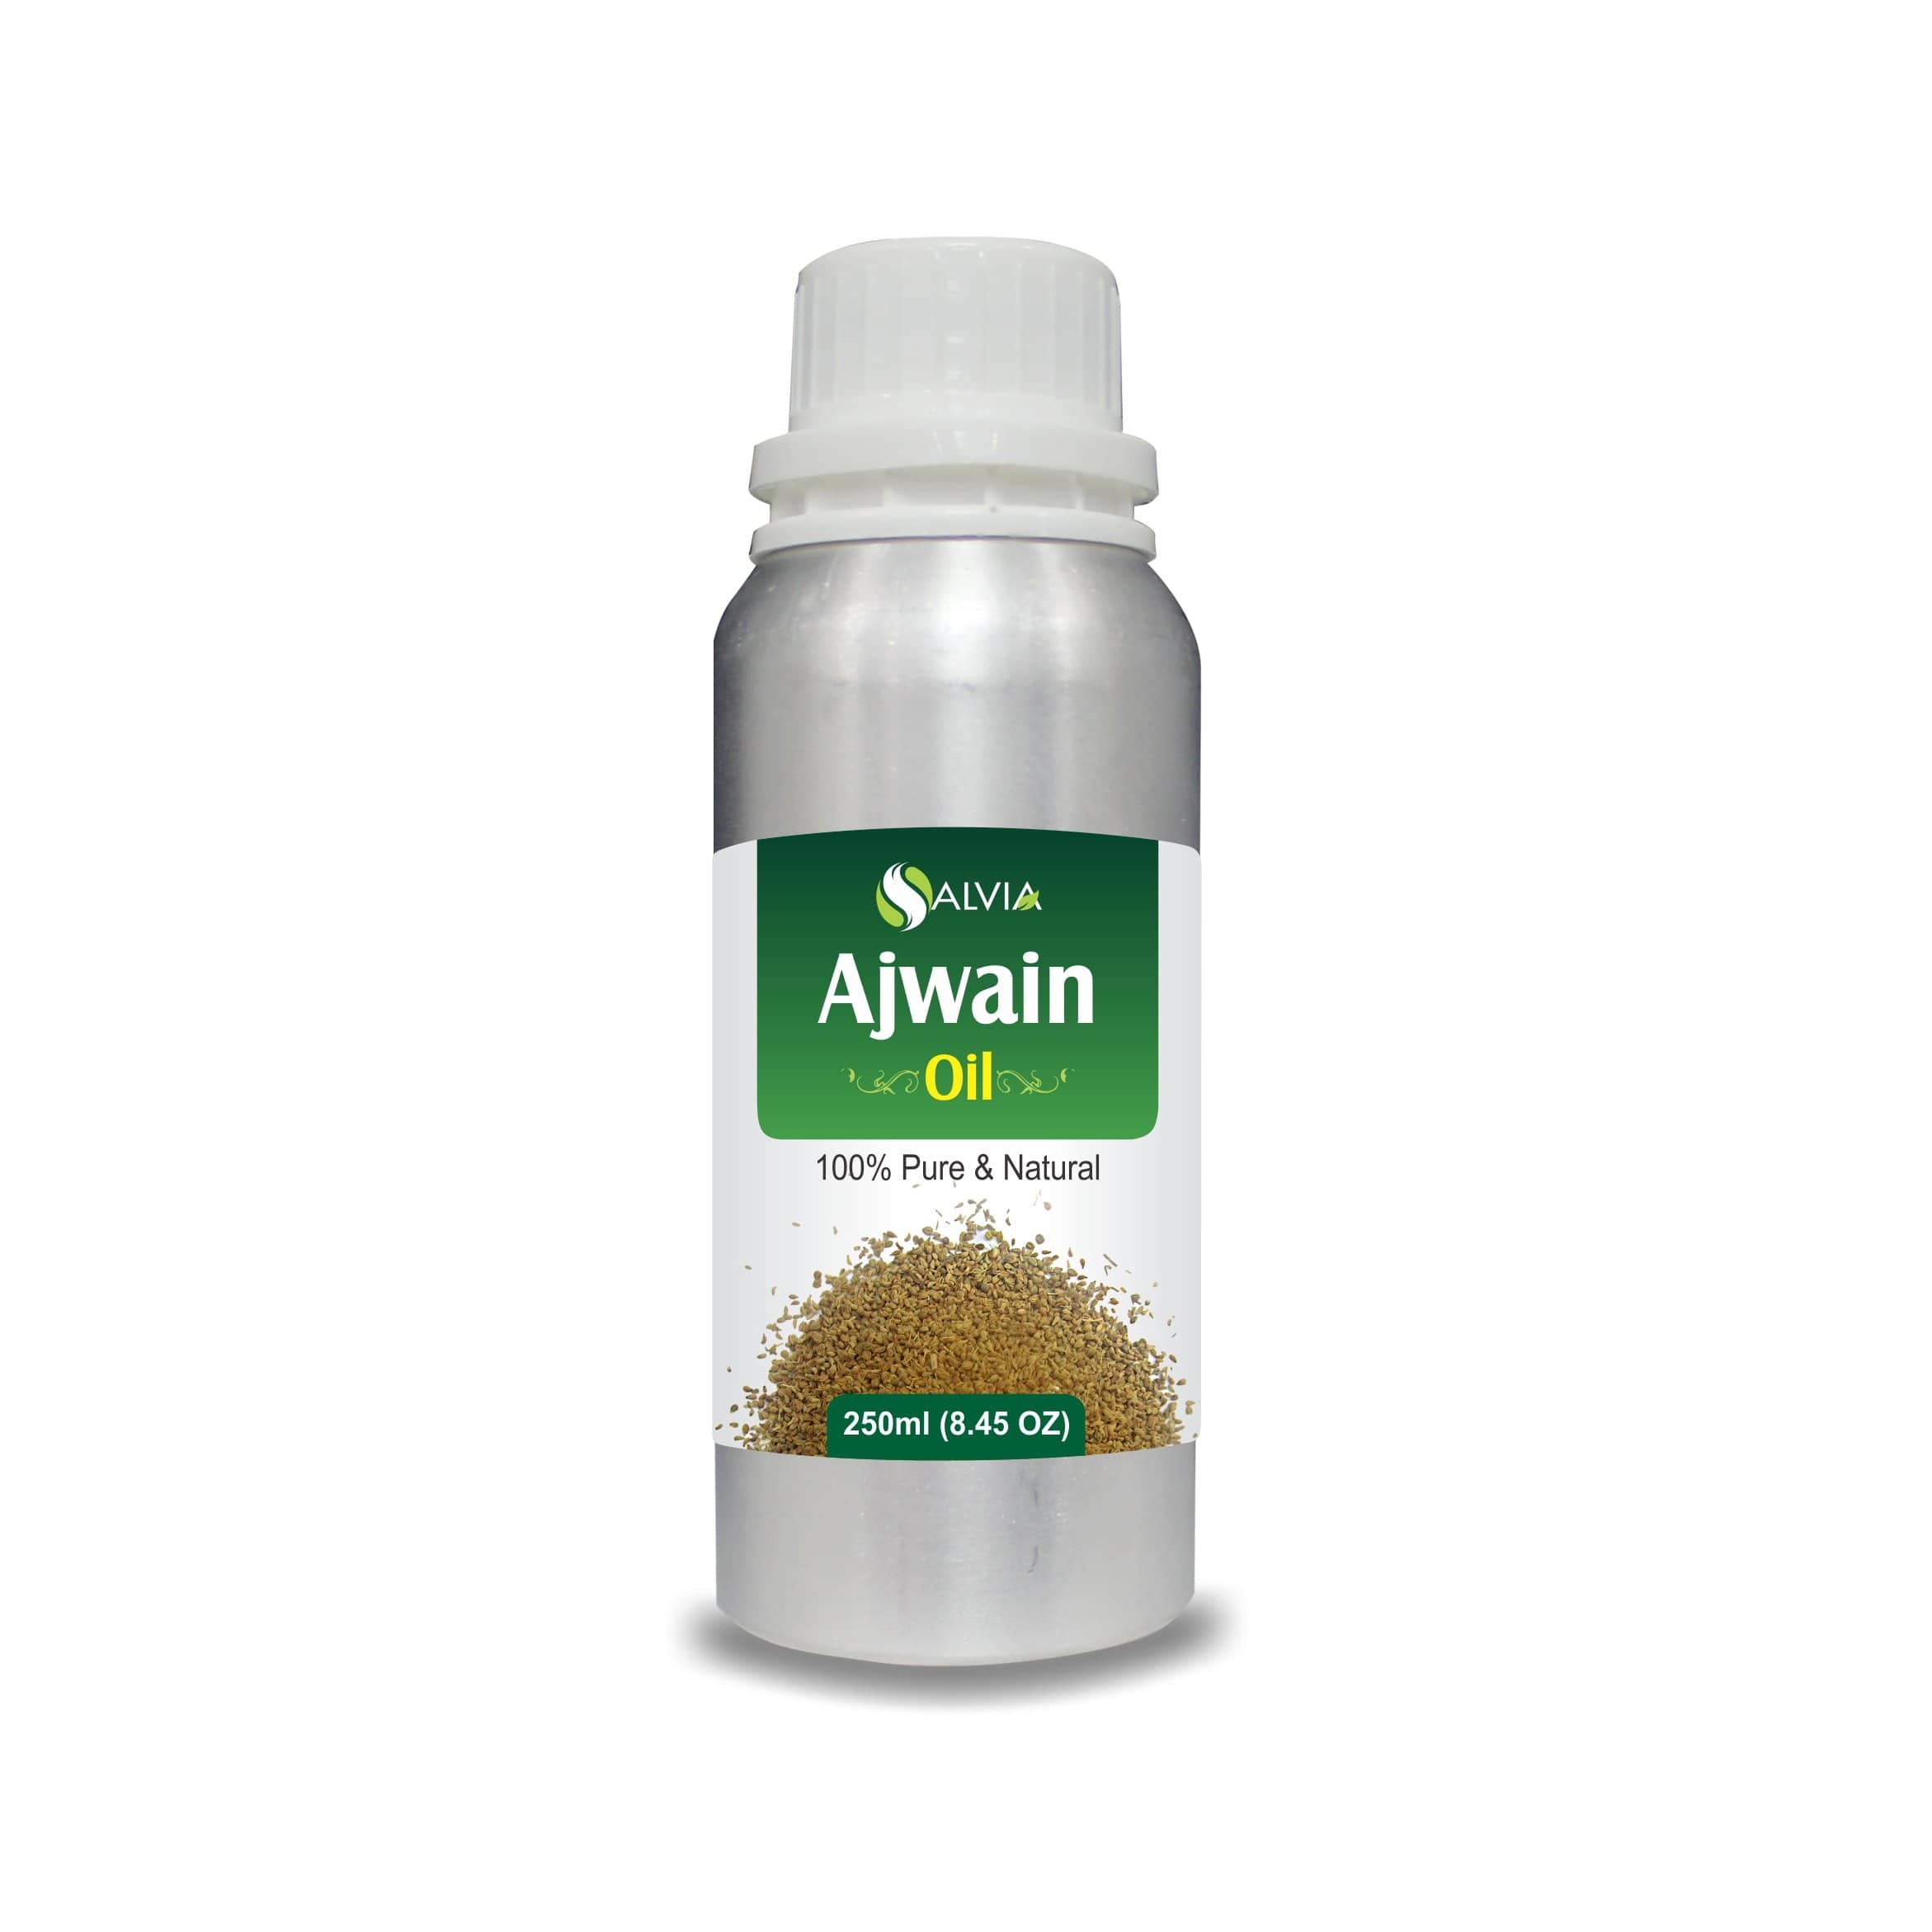 ajwain oil benefits for skin